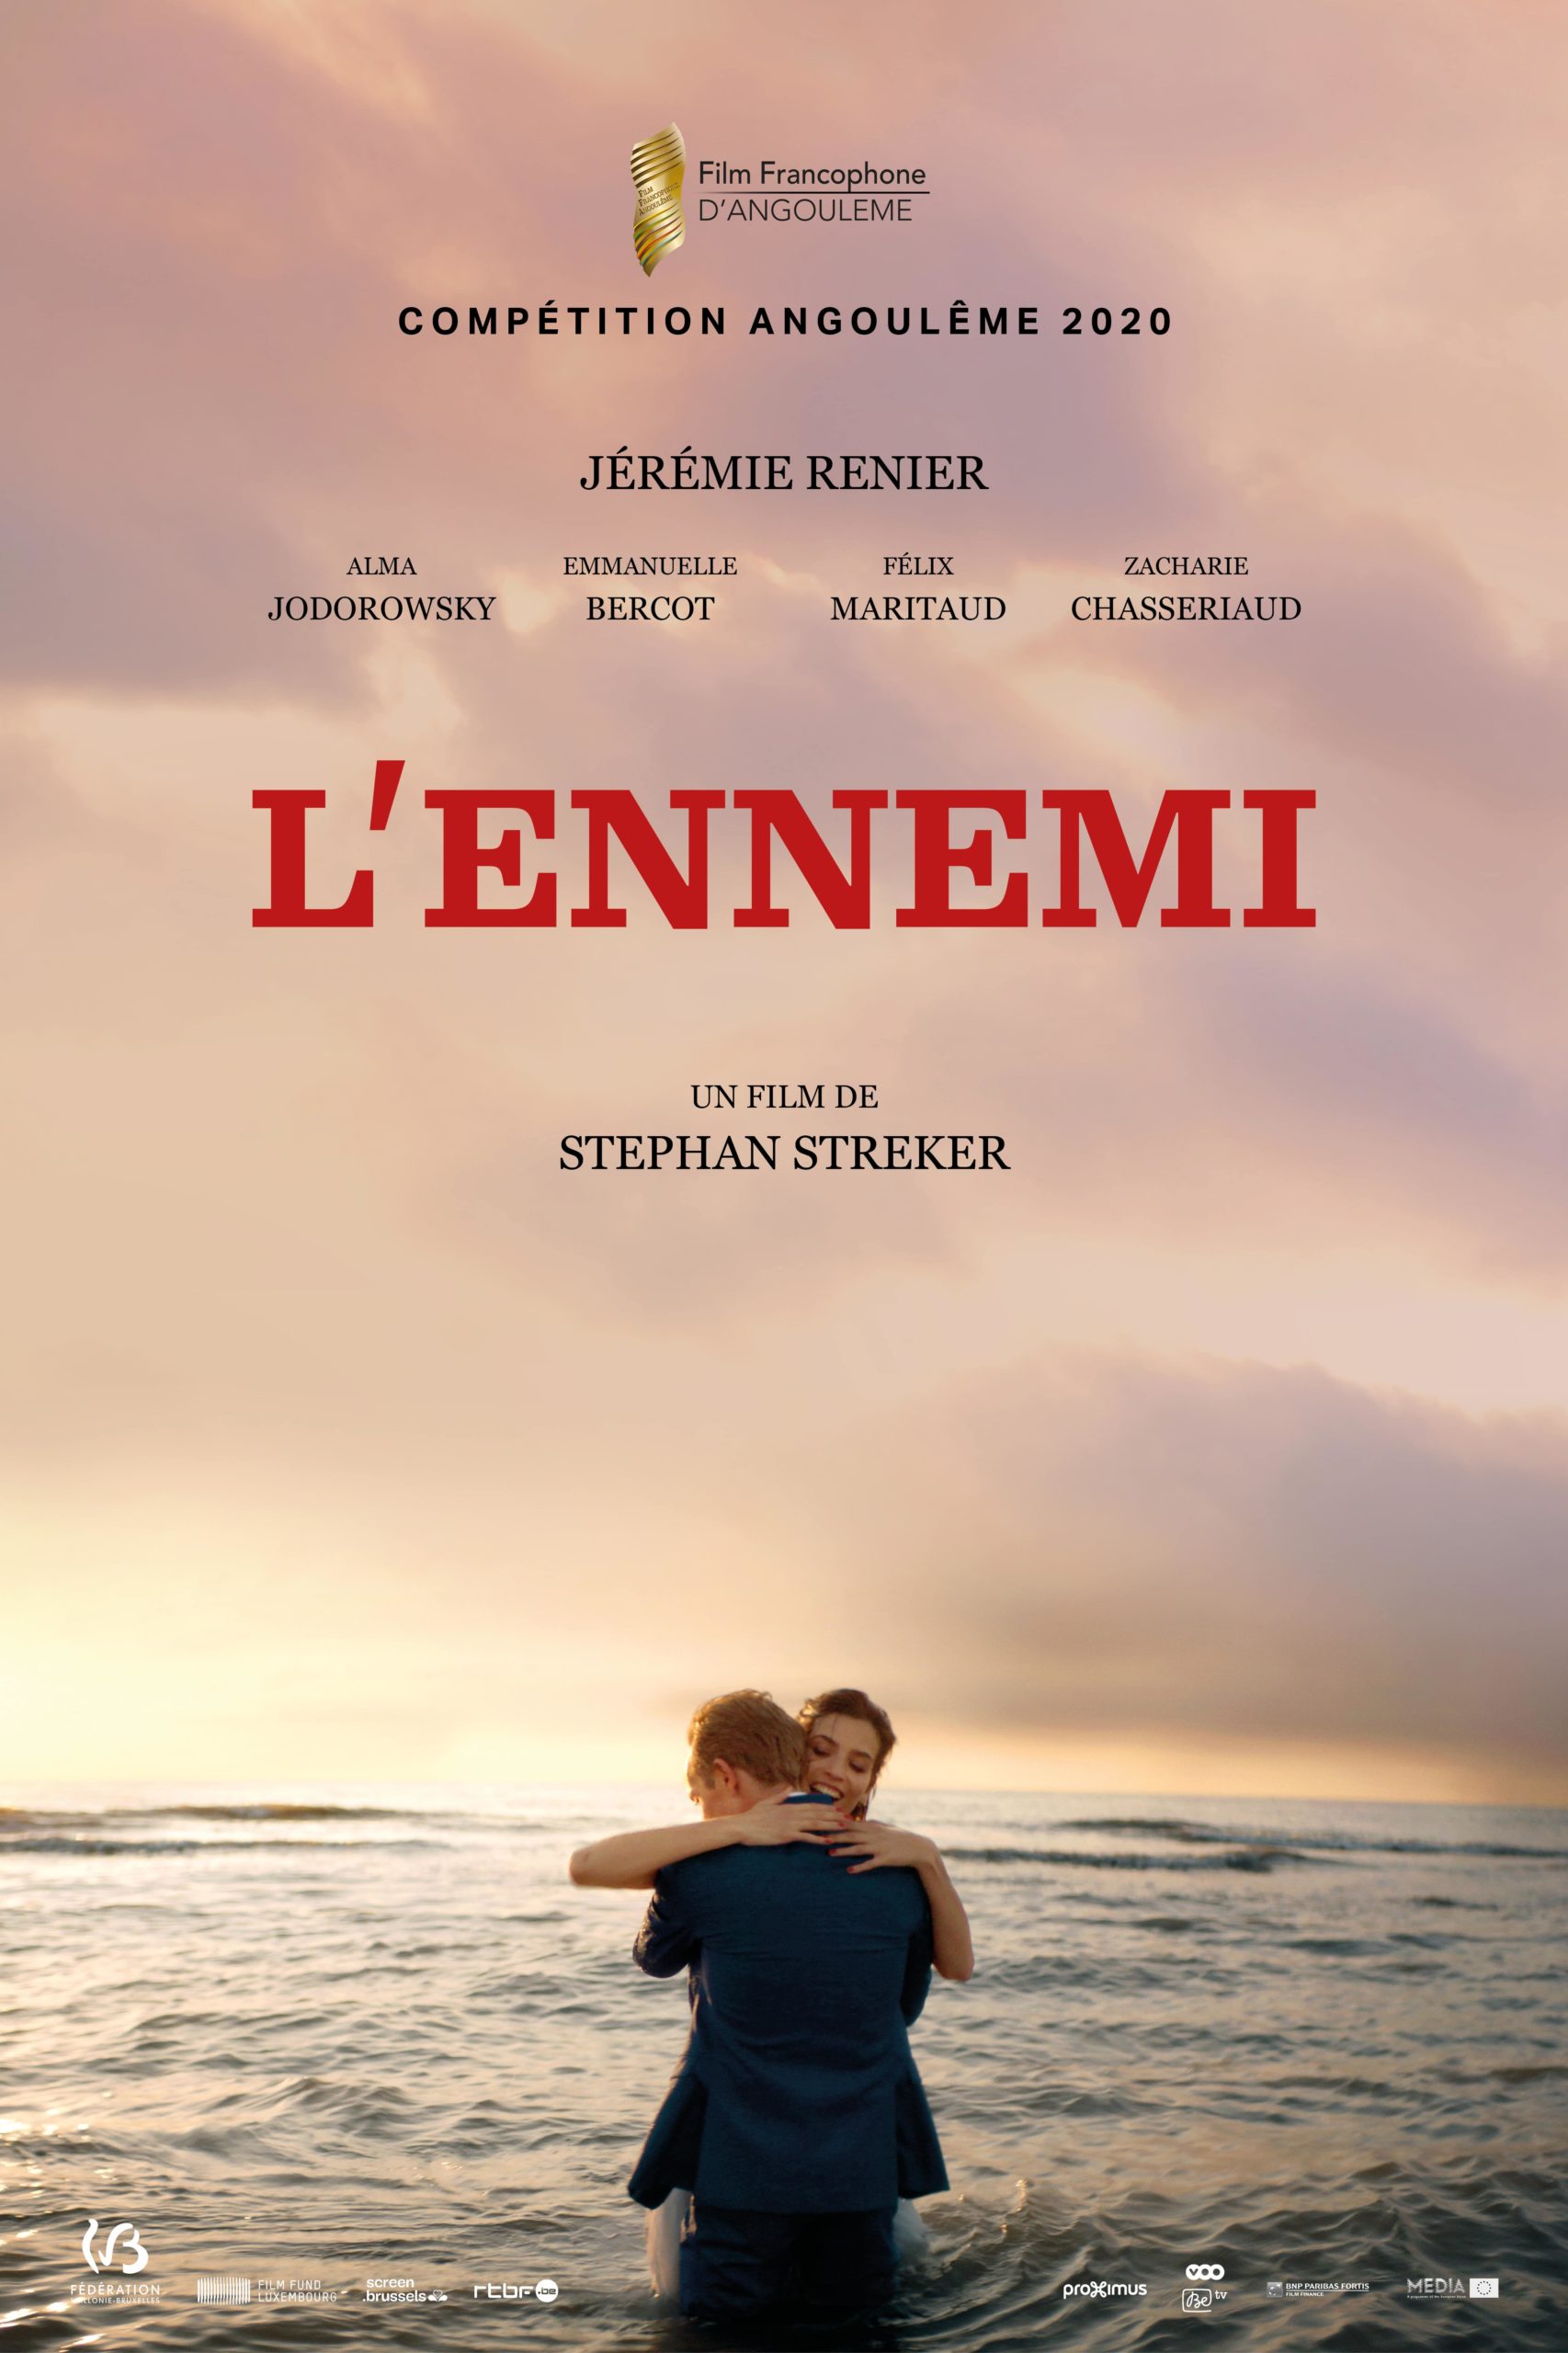 L'Ennemi film de Stephan Streker